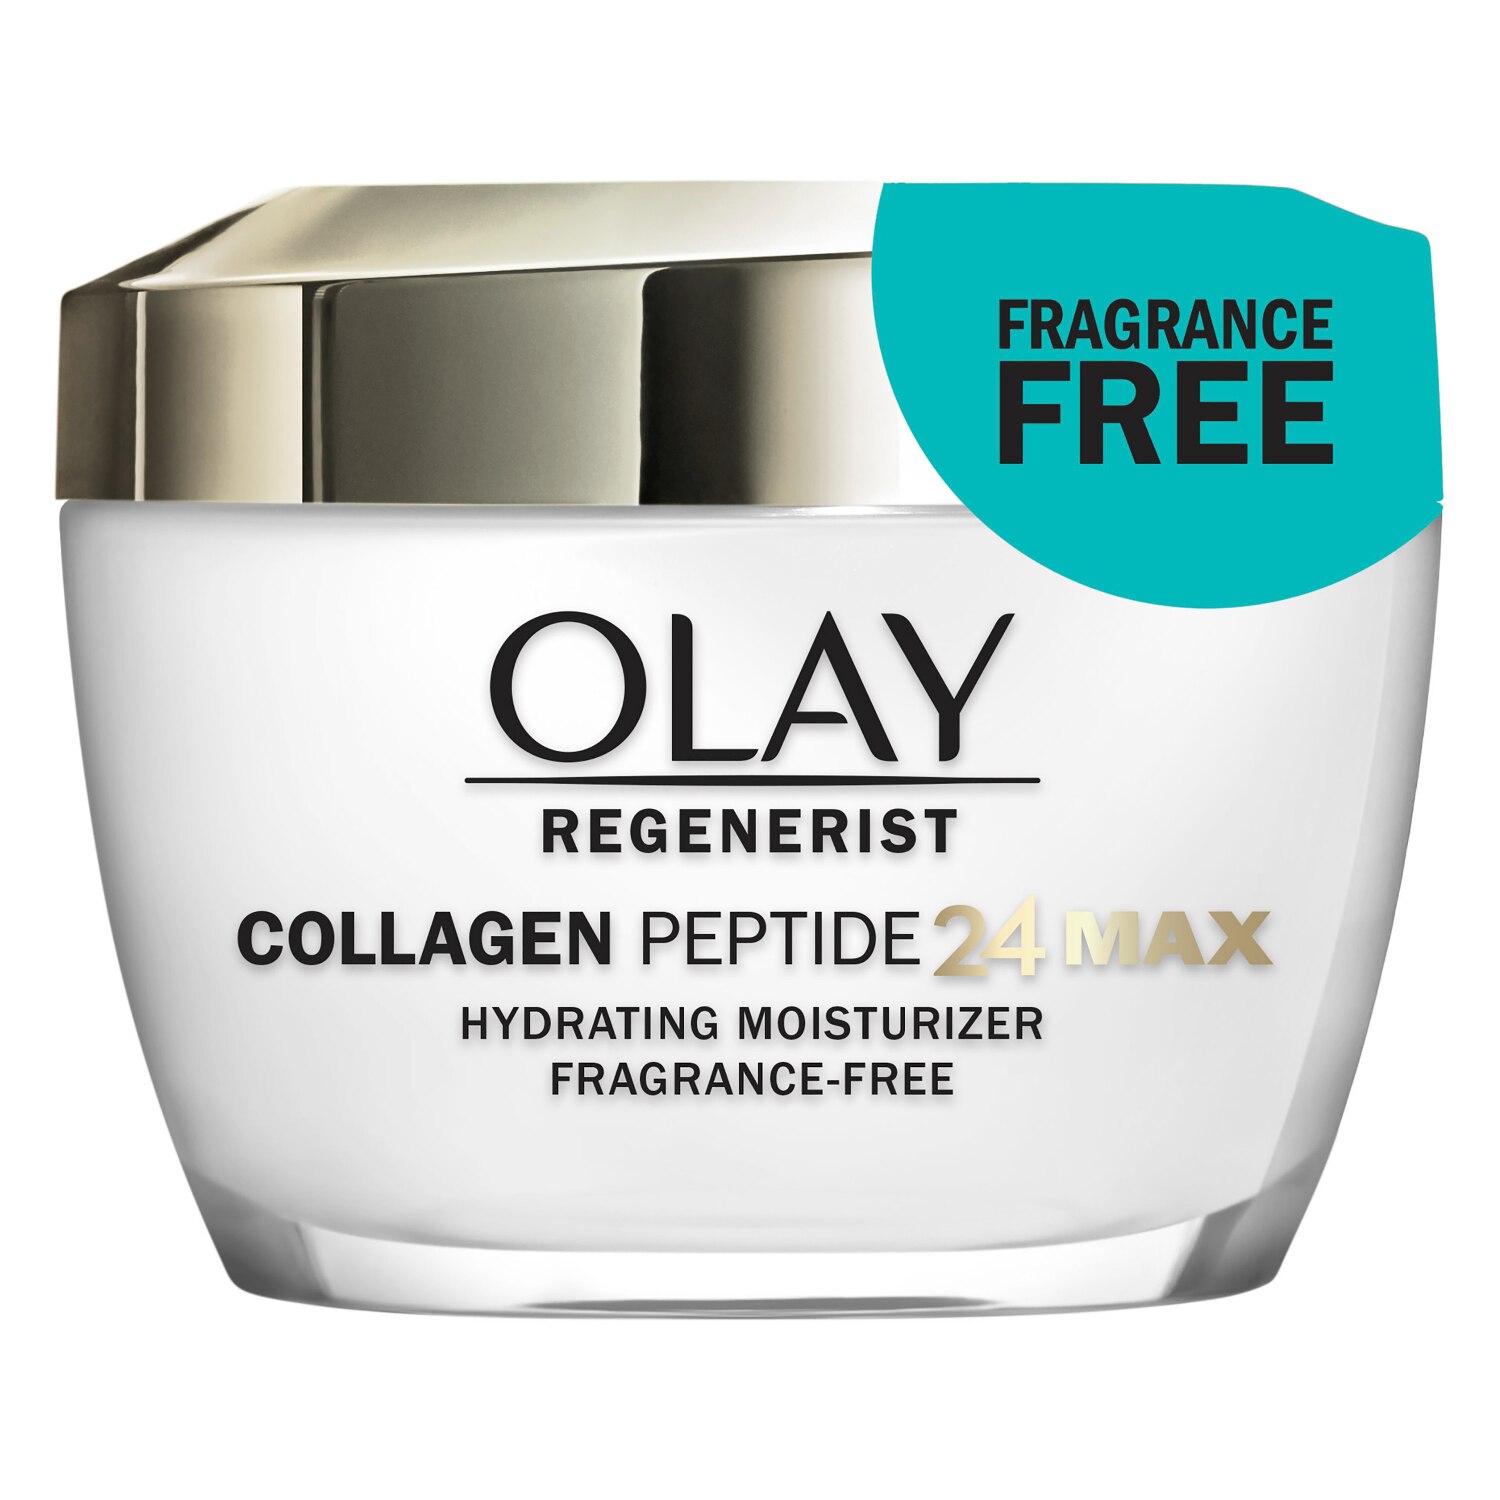 Olay Regenerist Collagen Peptide 24 MAX Face Moisturizer, Fragrance Free, 1.7 OZ